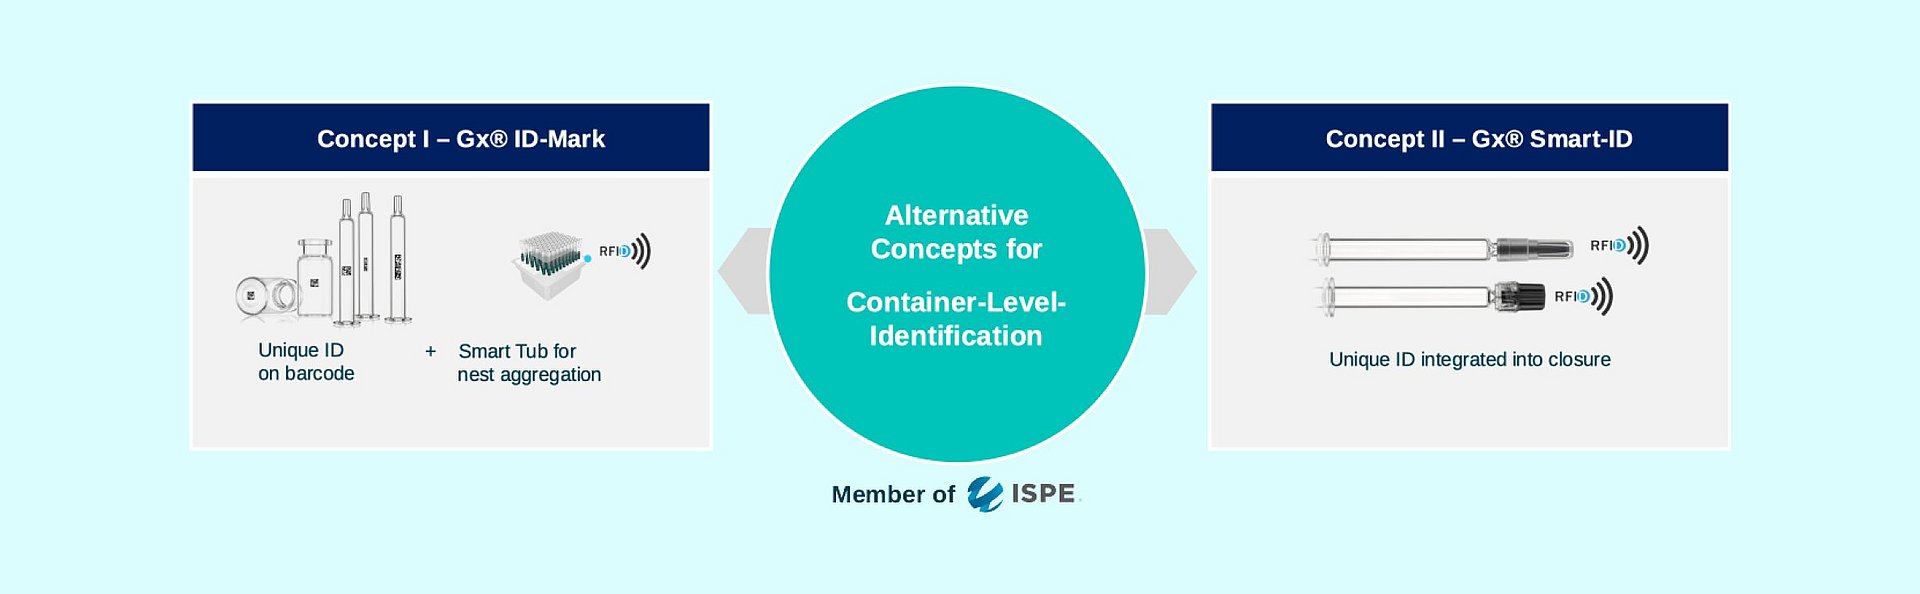 Container-level Identification - Gerresheimer AG